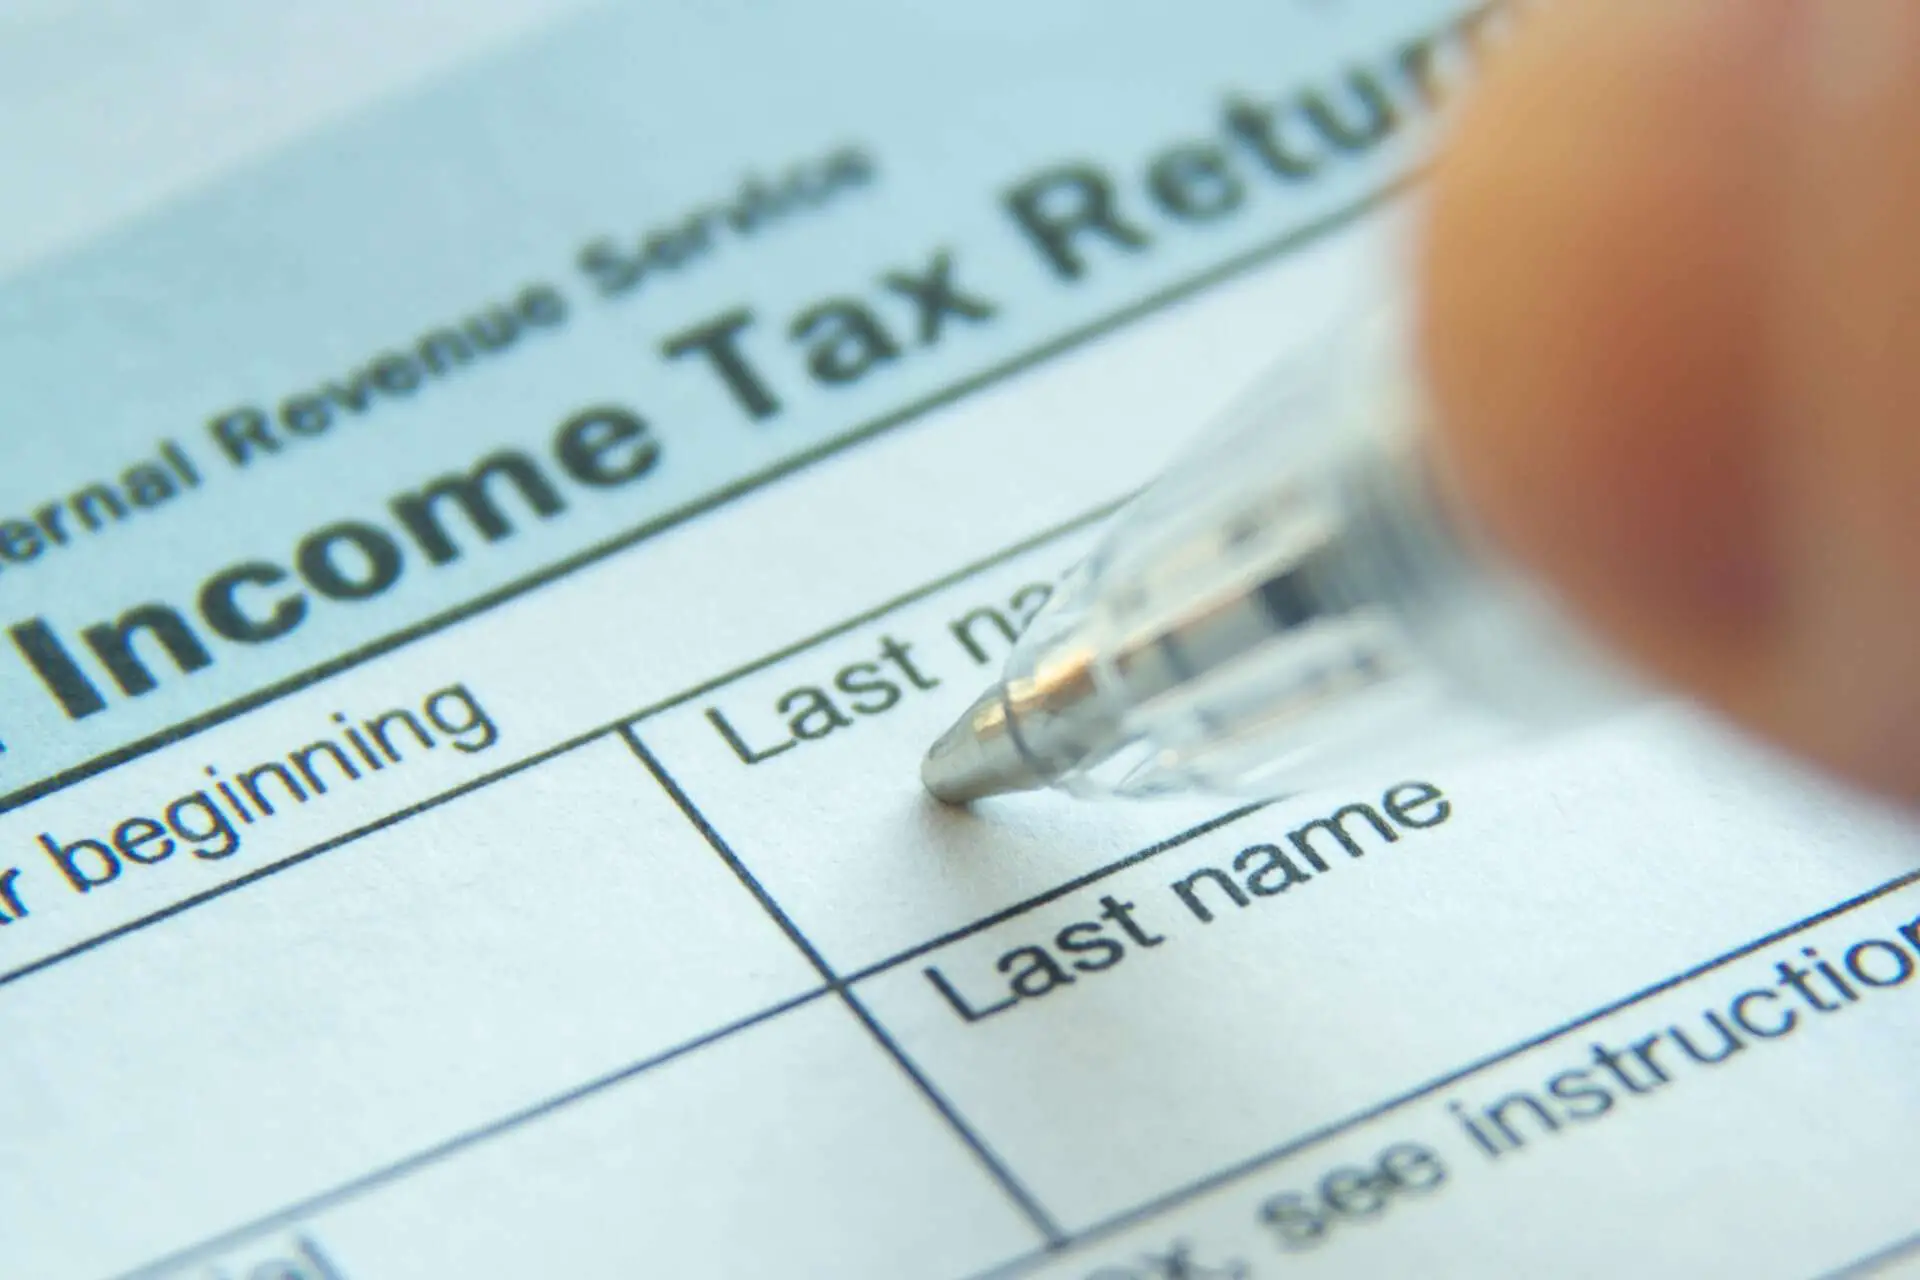 Income tax return photo free image download